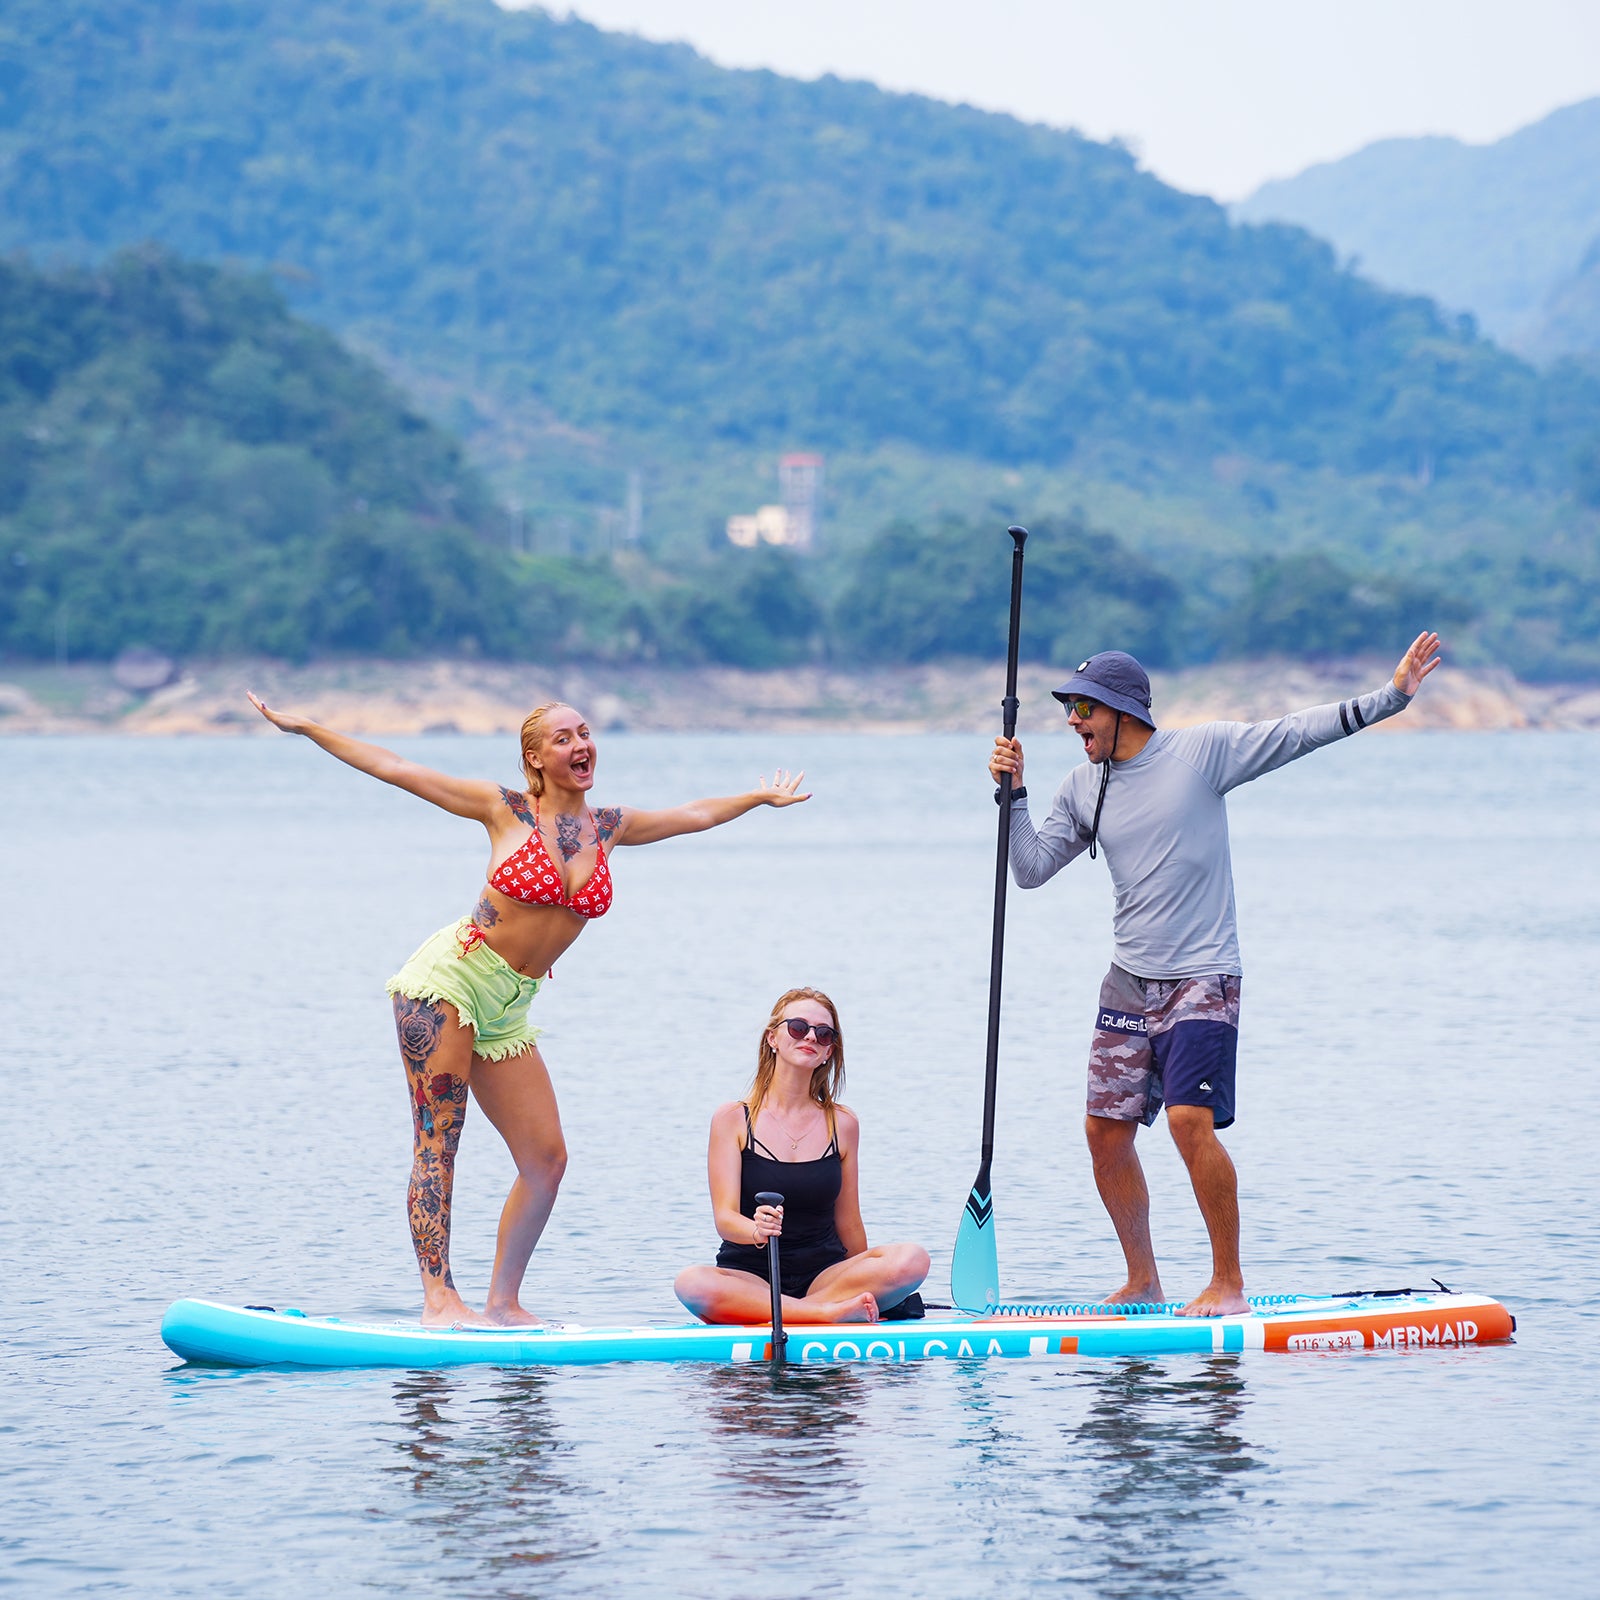 11’6 Ocean Blaze Inflatable Paddle Board Package